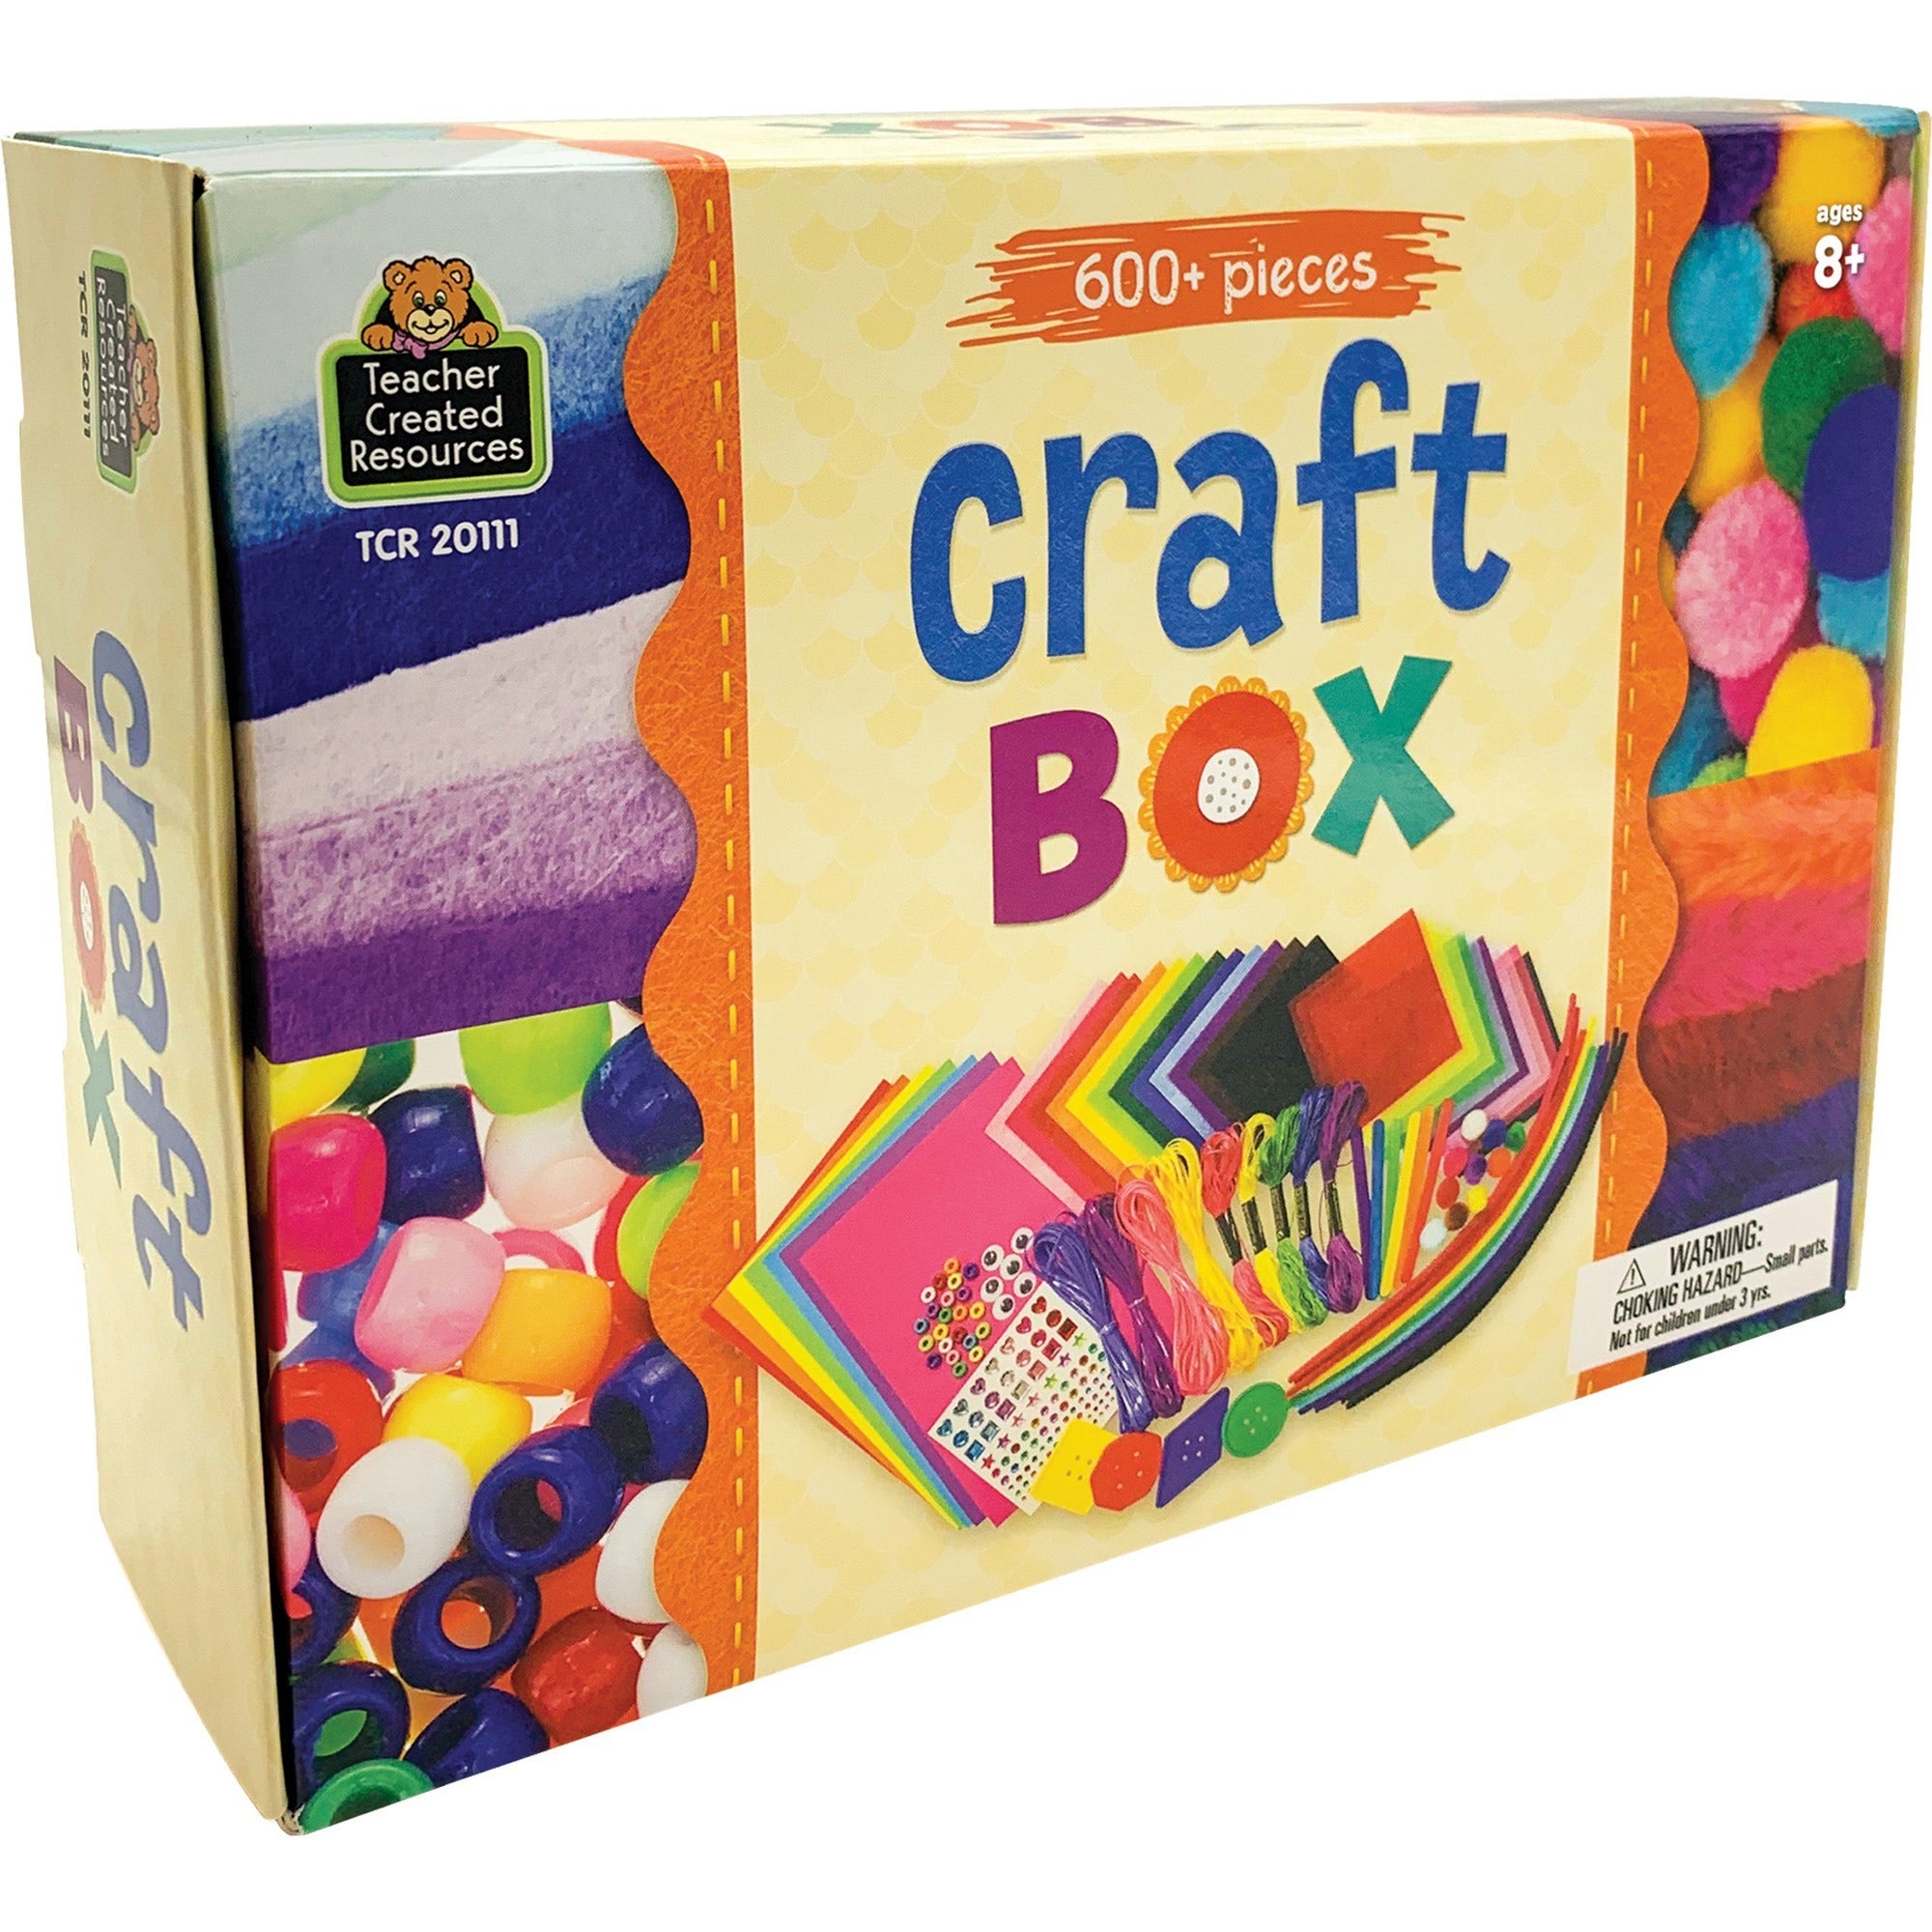 teacher-created-resources-craft-box-crafting-artwork-600-pieces-1-each-multi-felt_tcr20111 - 1